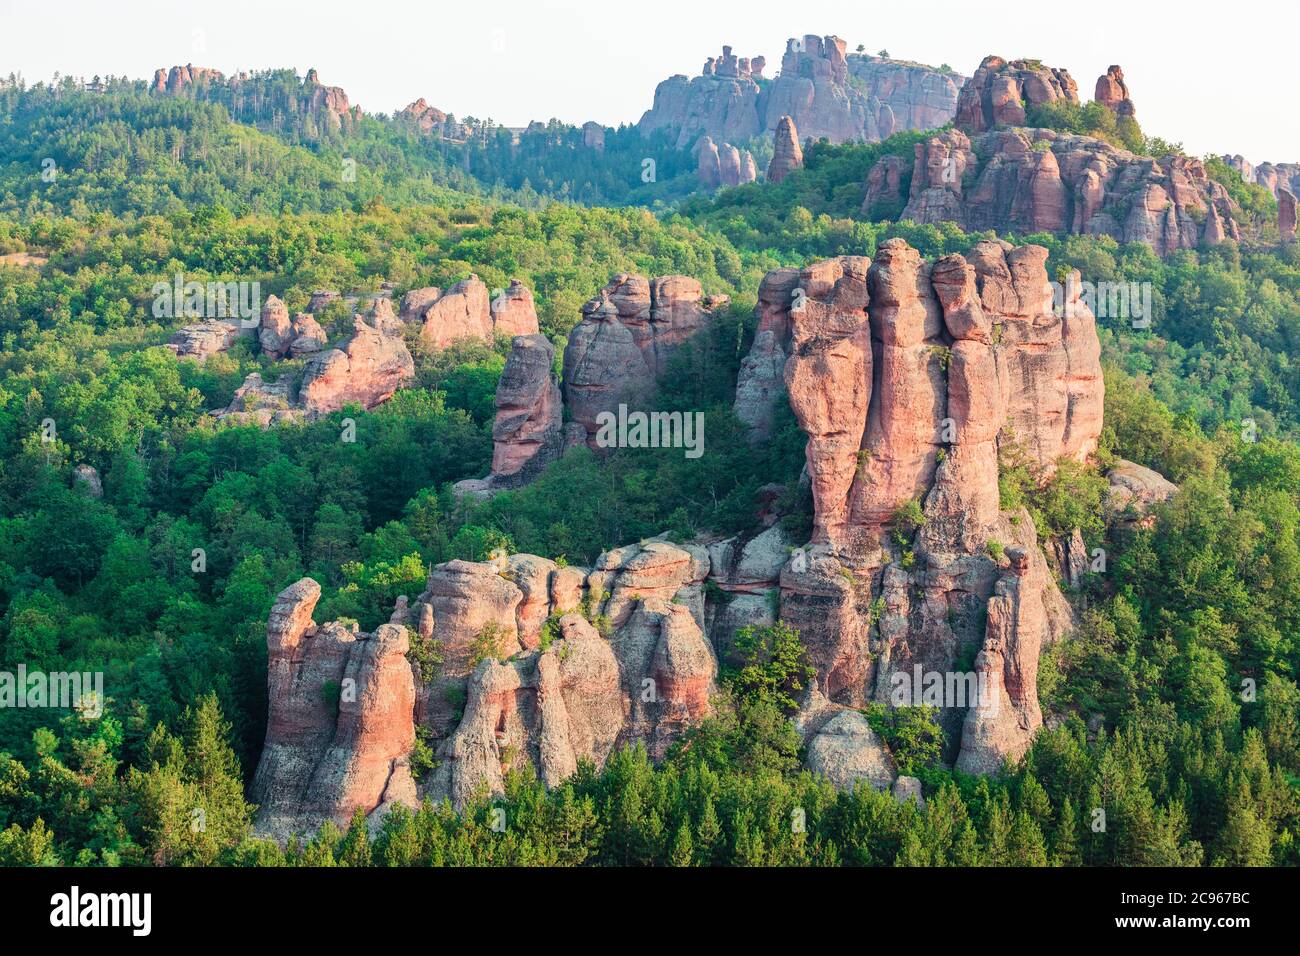 The Belogradchik Rocks - natural landmark in the area of Belogradchik, Balkan Mountains, northwest Bulgaria Stock Photo